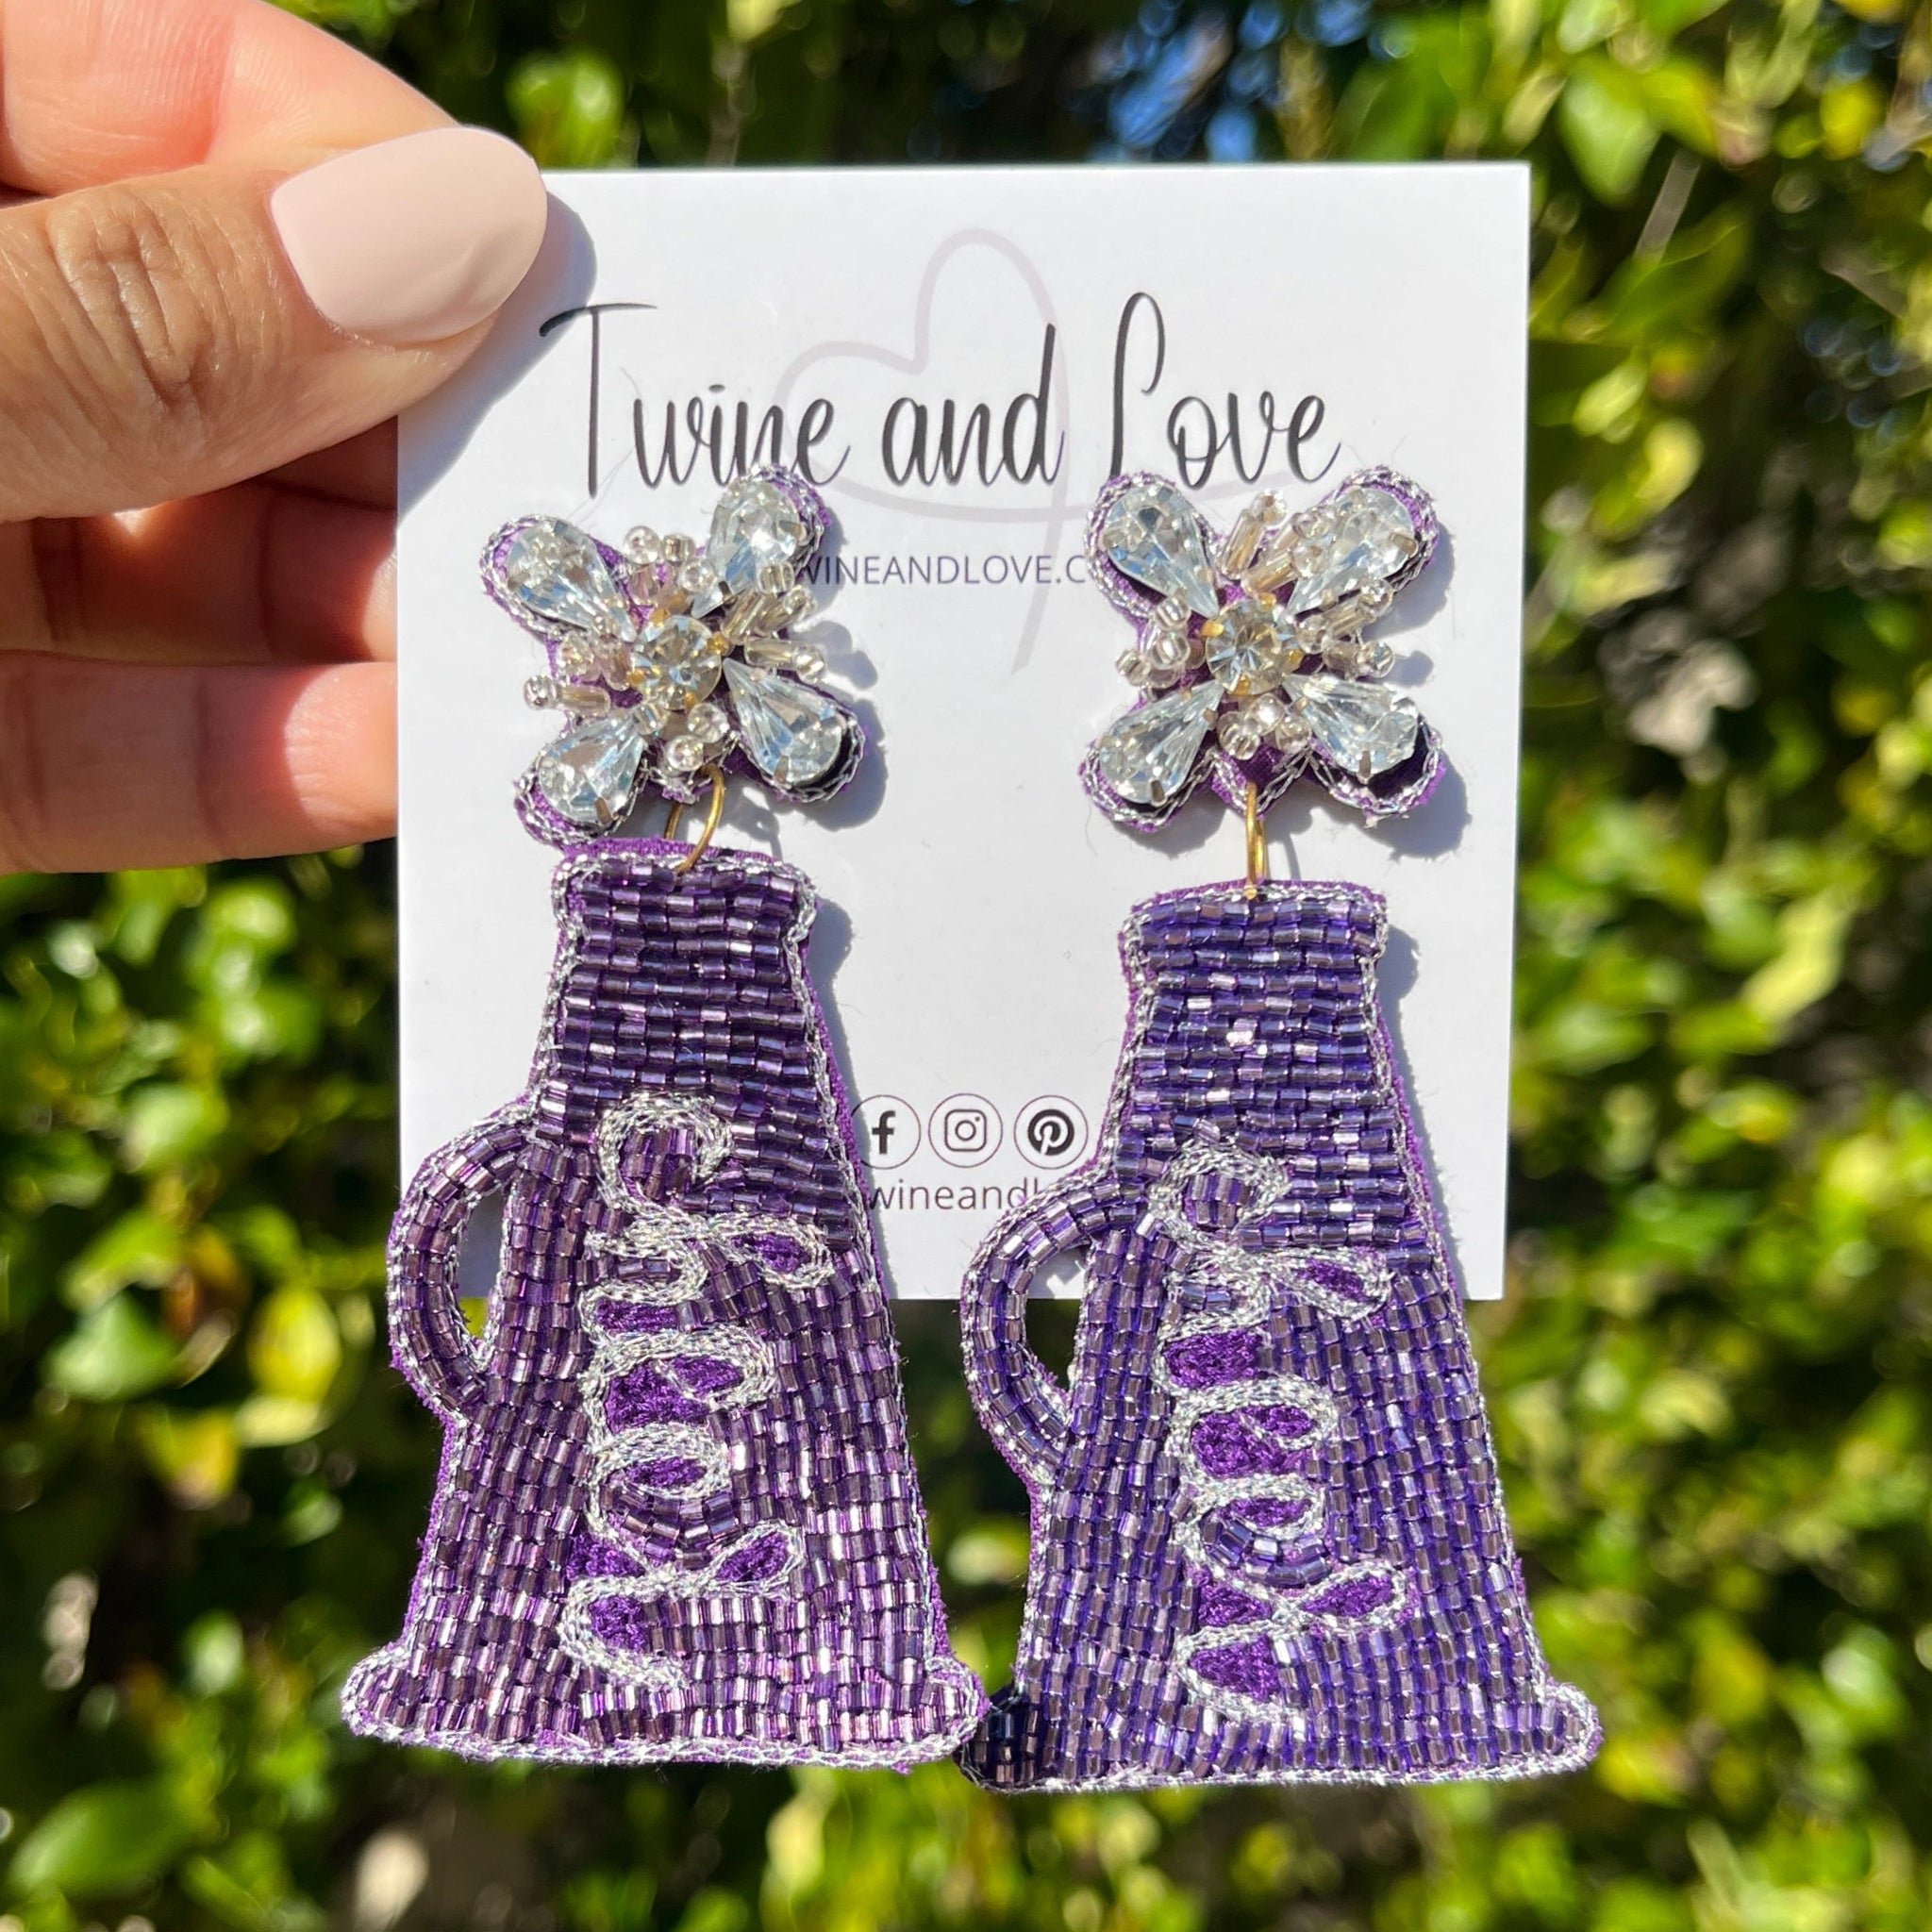 Twine and Love Valentine's Day Earrings, Beaded Earrings